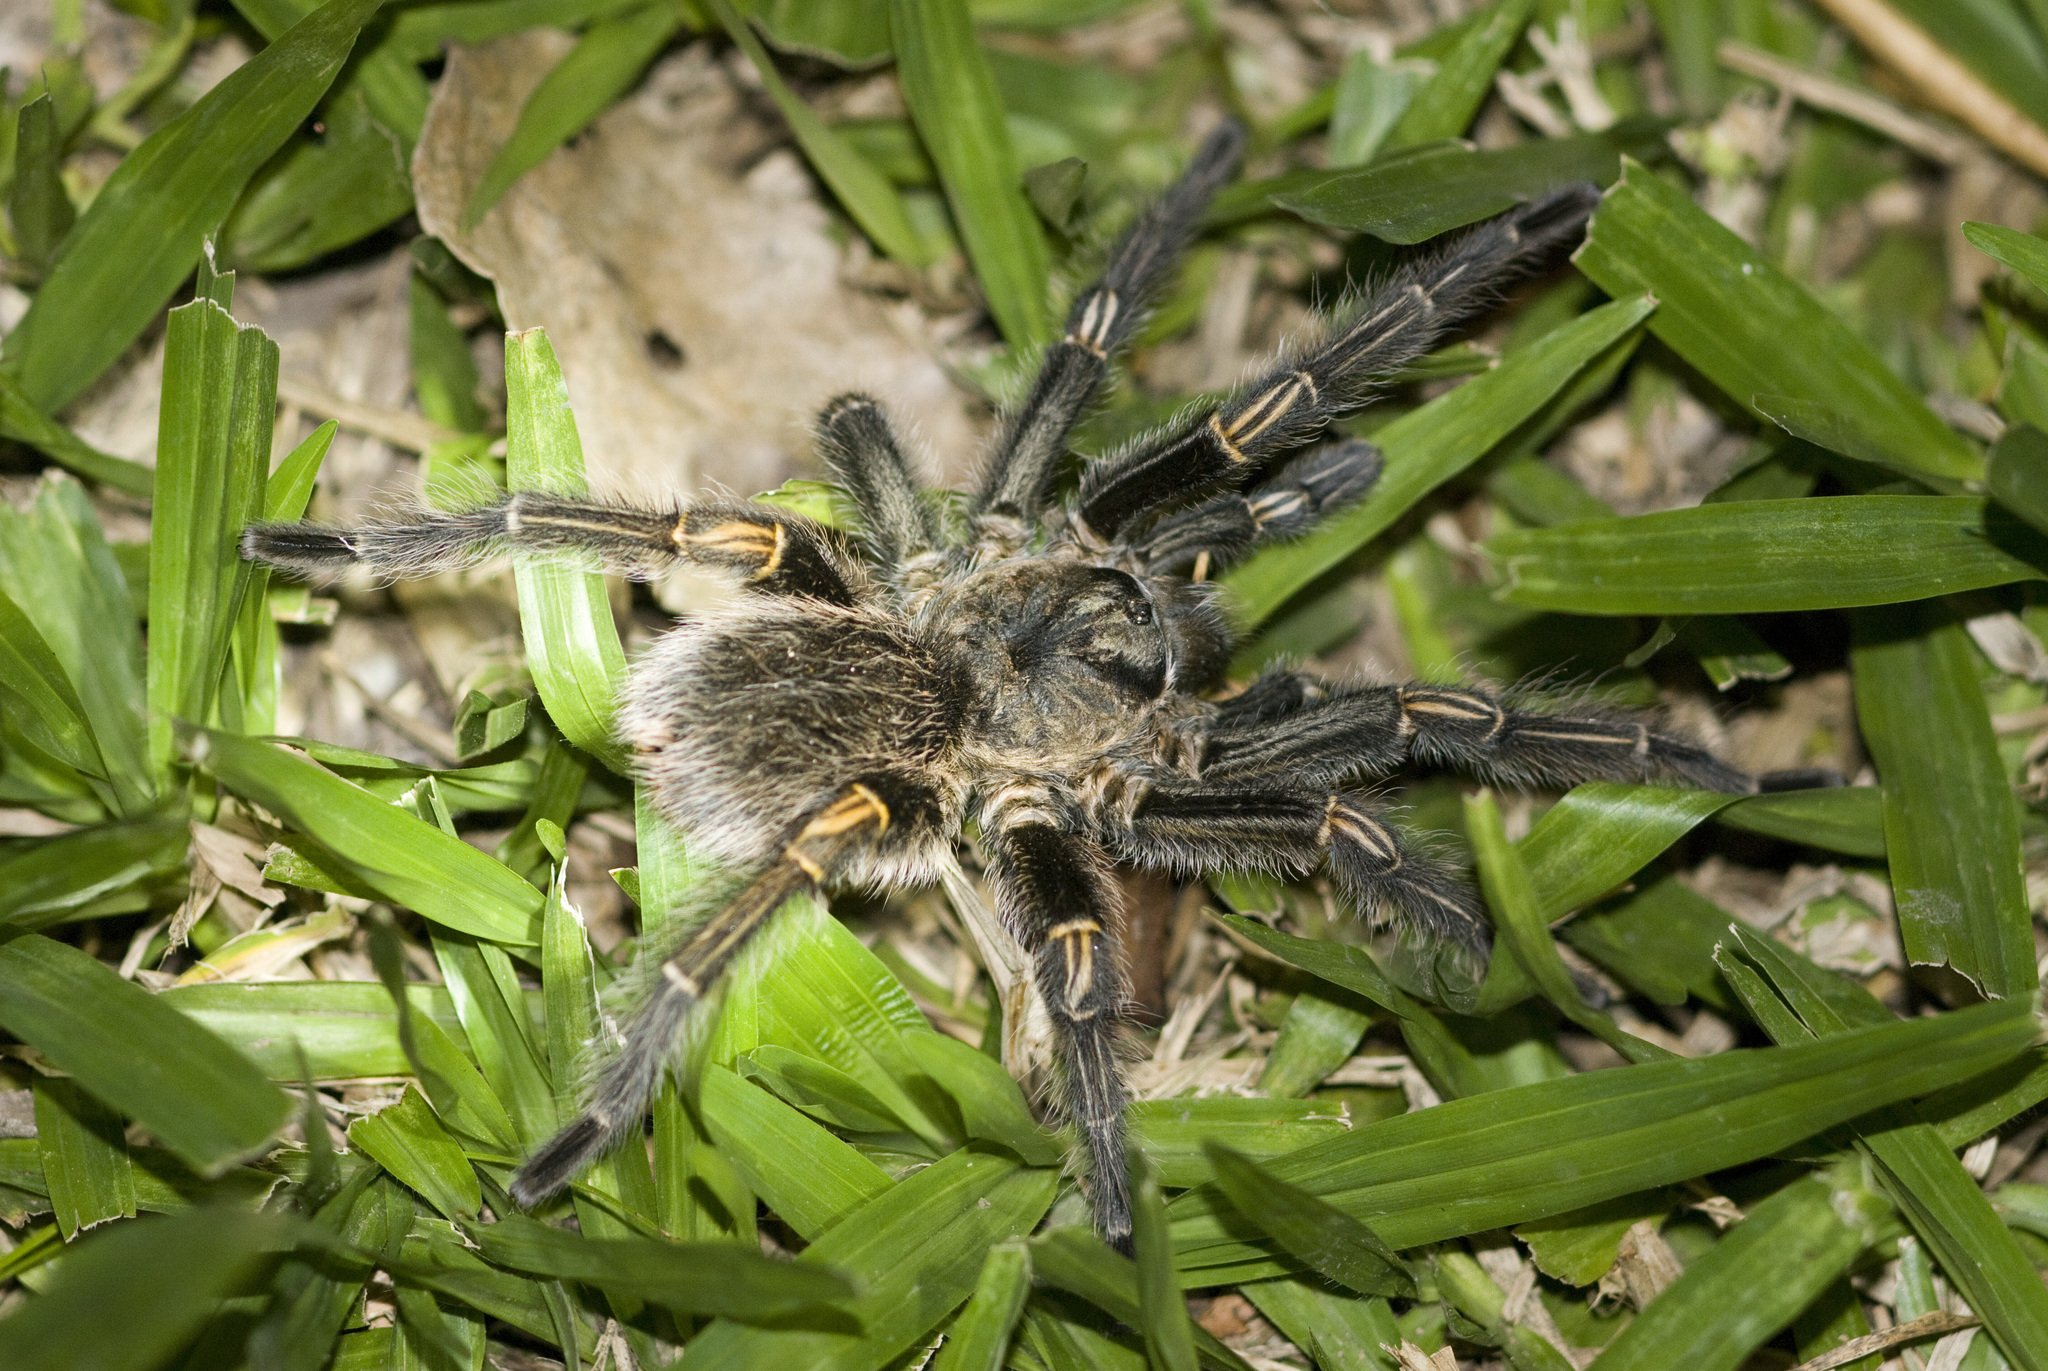 Chaco Golden Knee Tarantula 8.5 In/21.59cm, The Top 30 Worlds Biggest Spiders 2022 Update